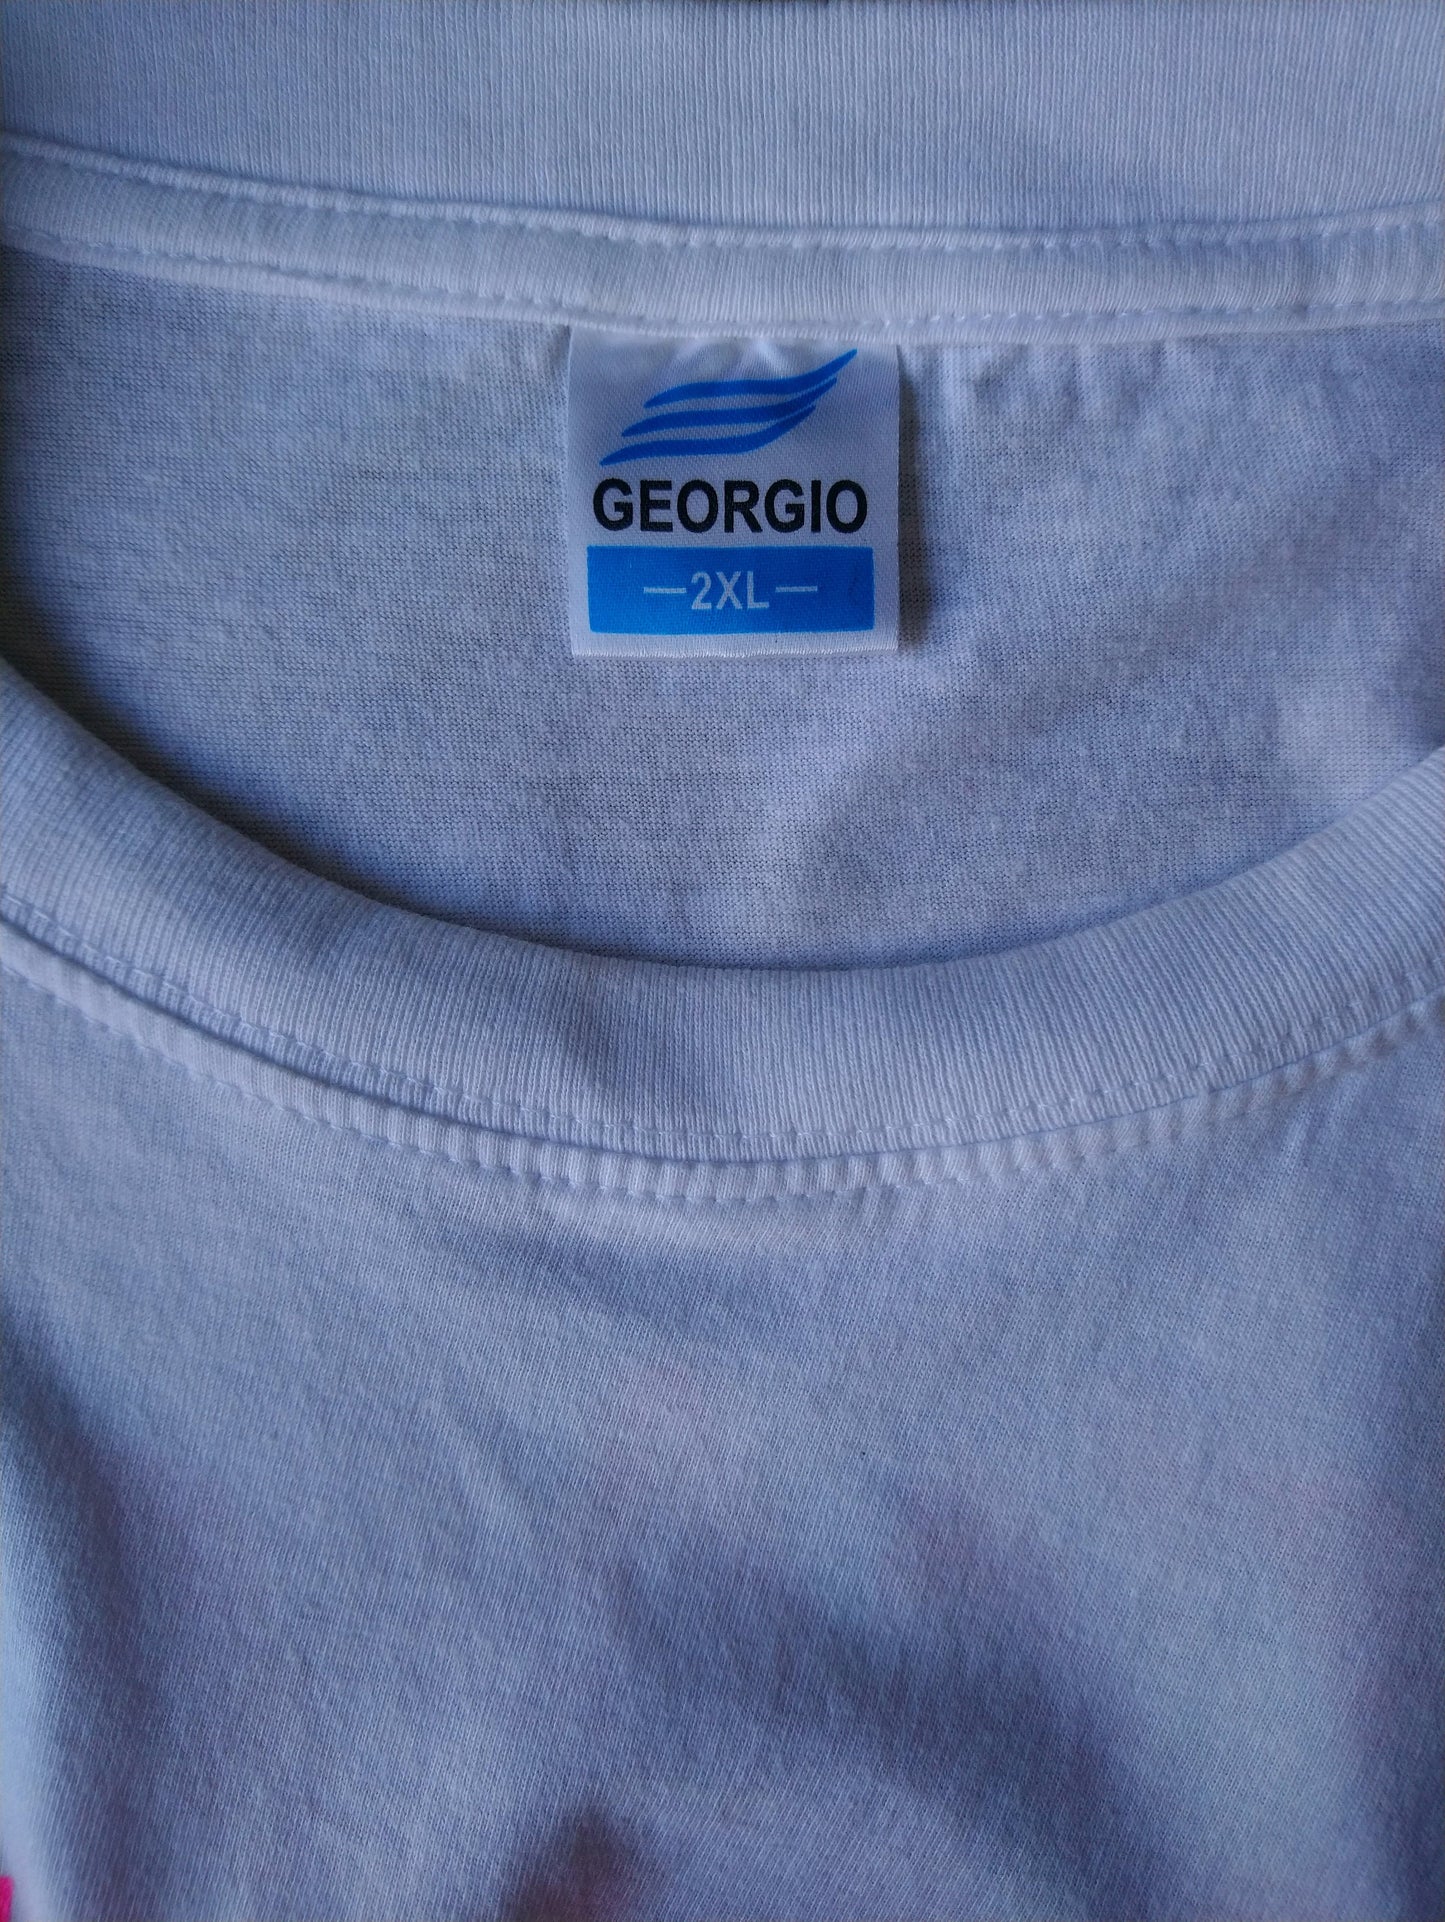 Georgio shirt Napa. Wit met opdruk. Maat XXL.